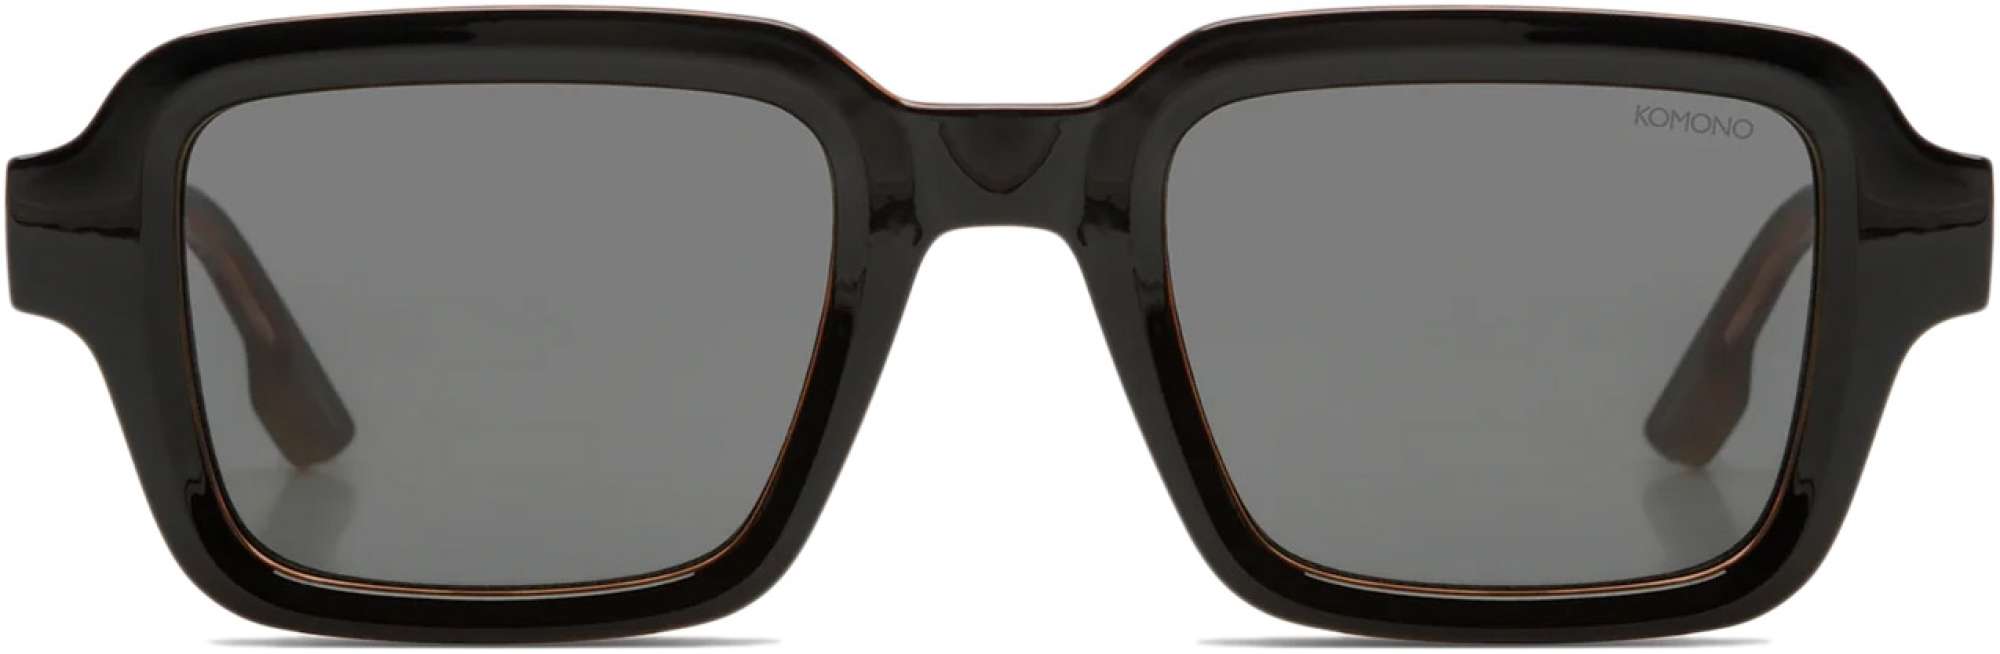 Afbeelding van Komono Lionel sunglasses black tortoise